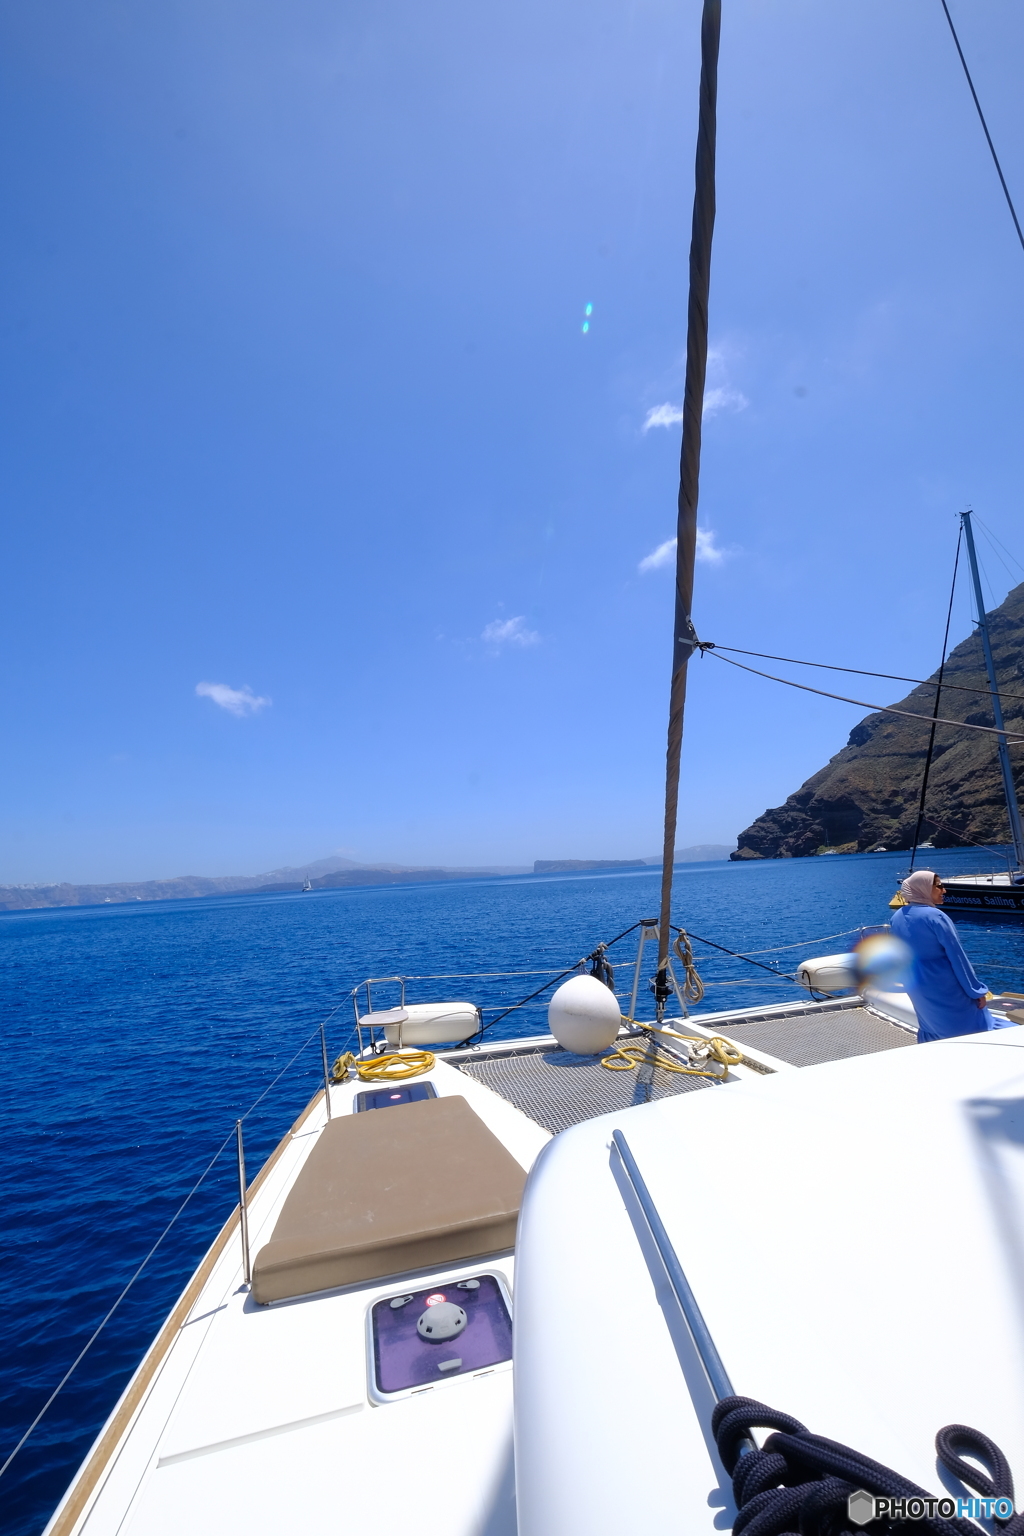 Aegean cruise